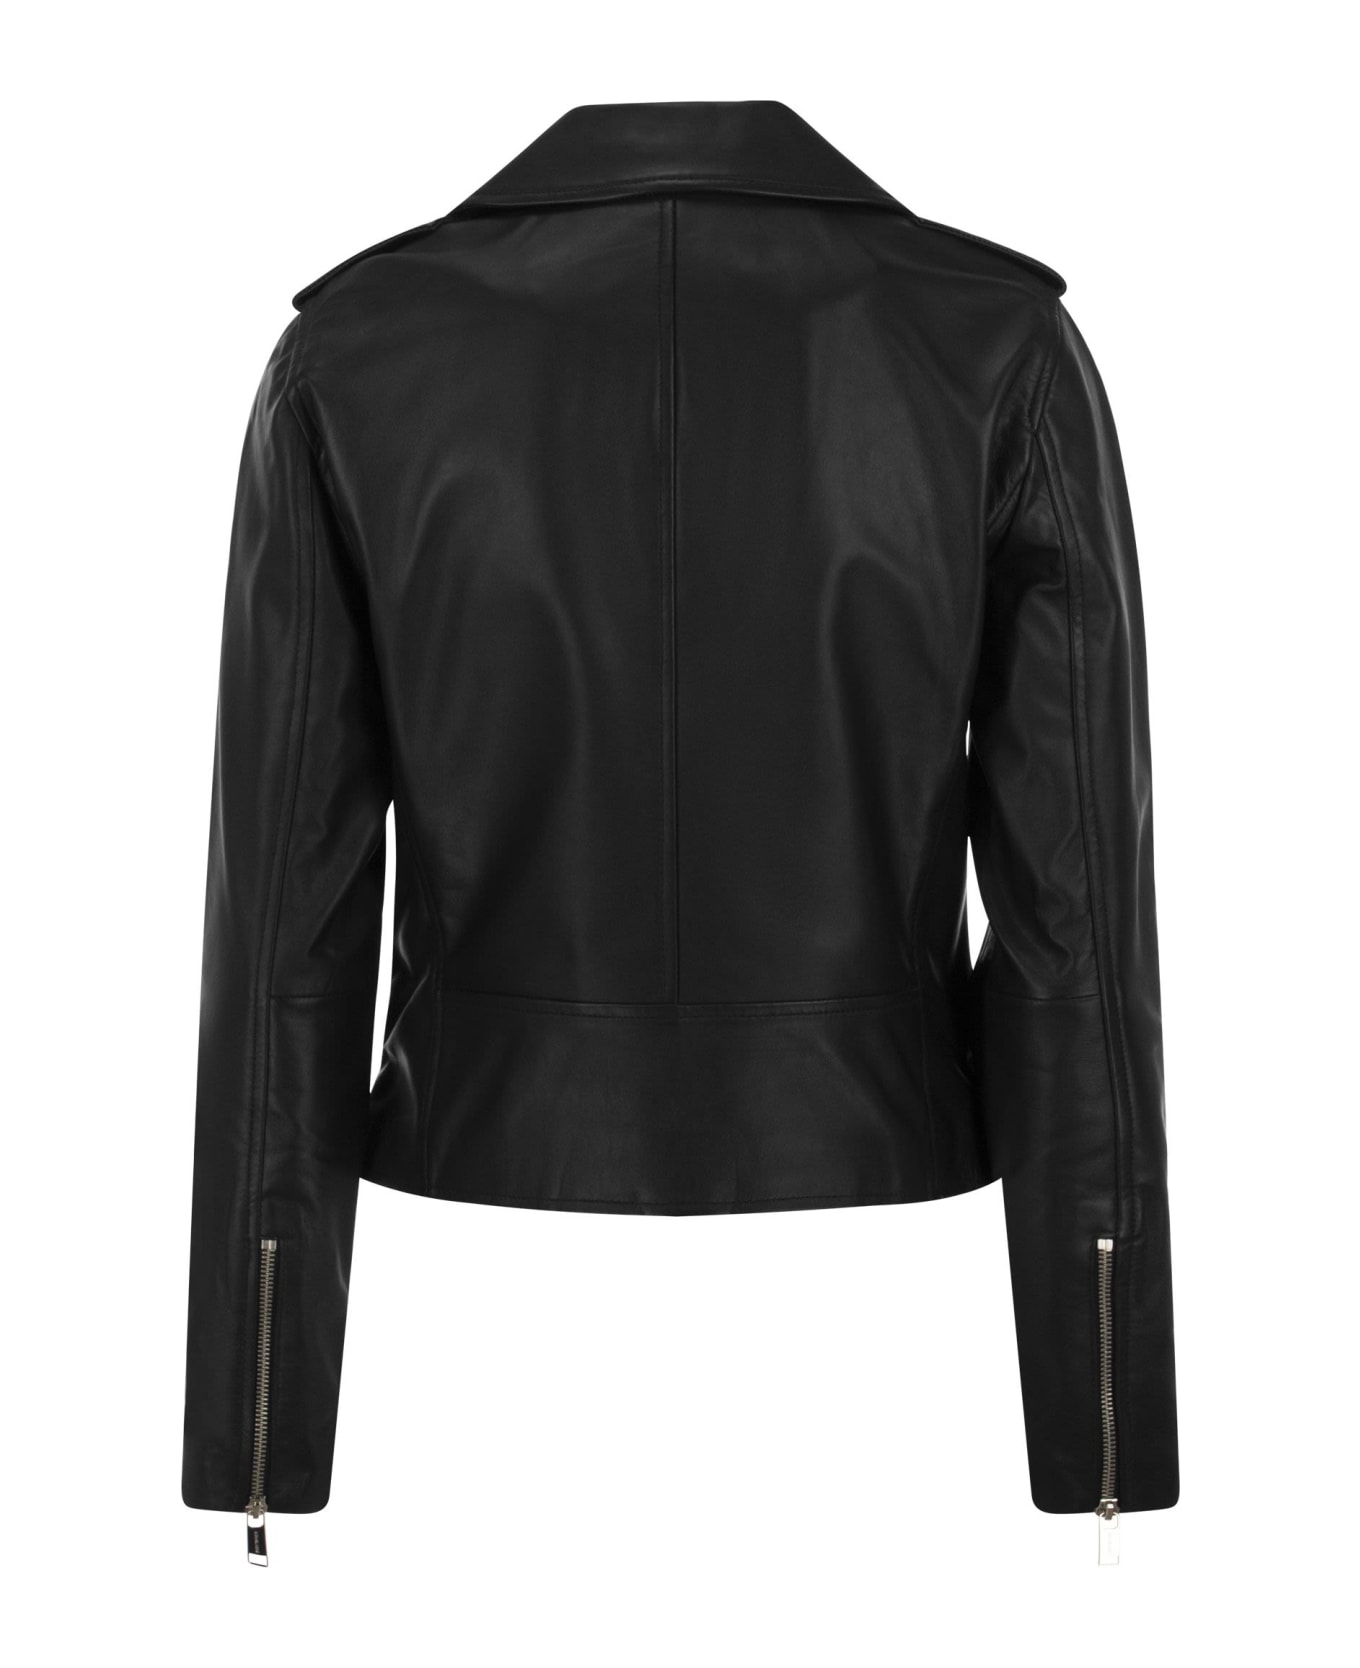 Michael Kors Leather Biker Jacket - Black